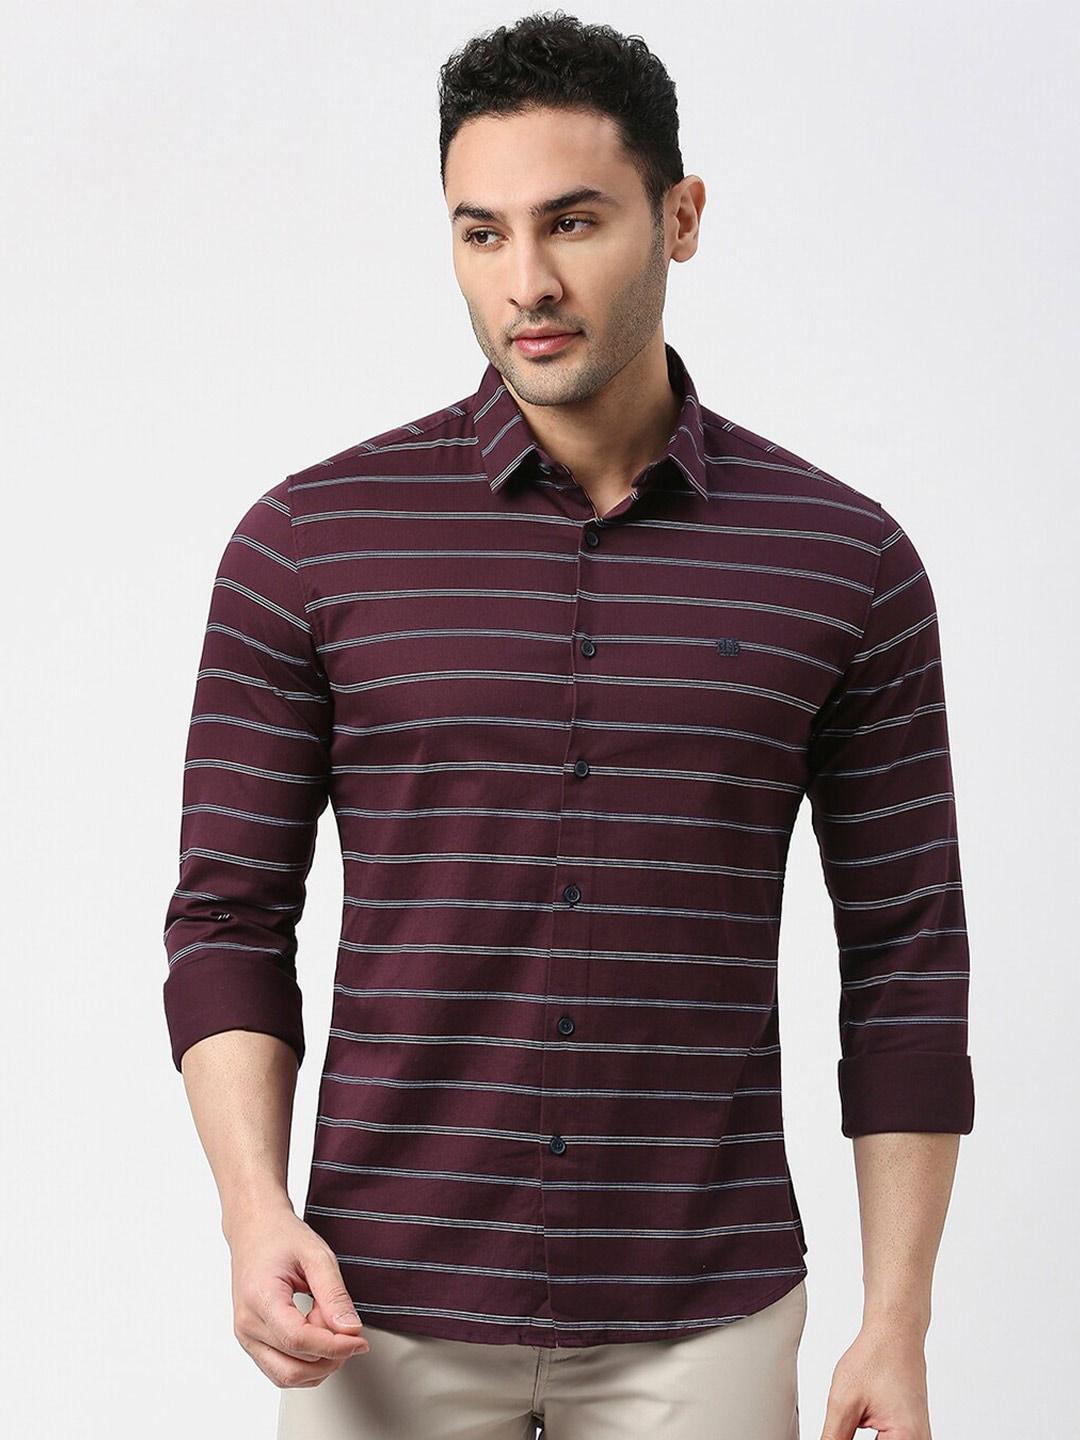 dragon hill slim fit horizontal striped casual shirt